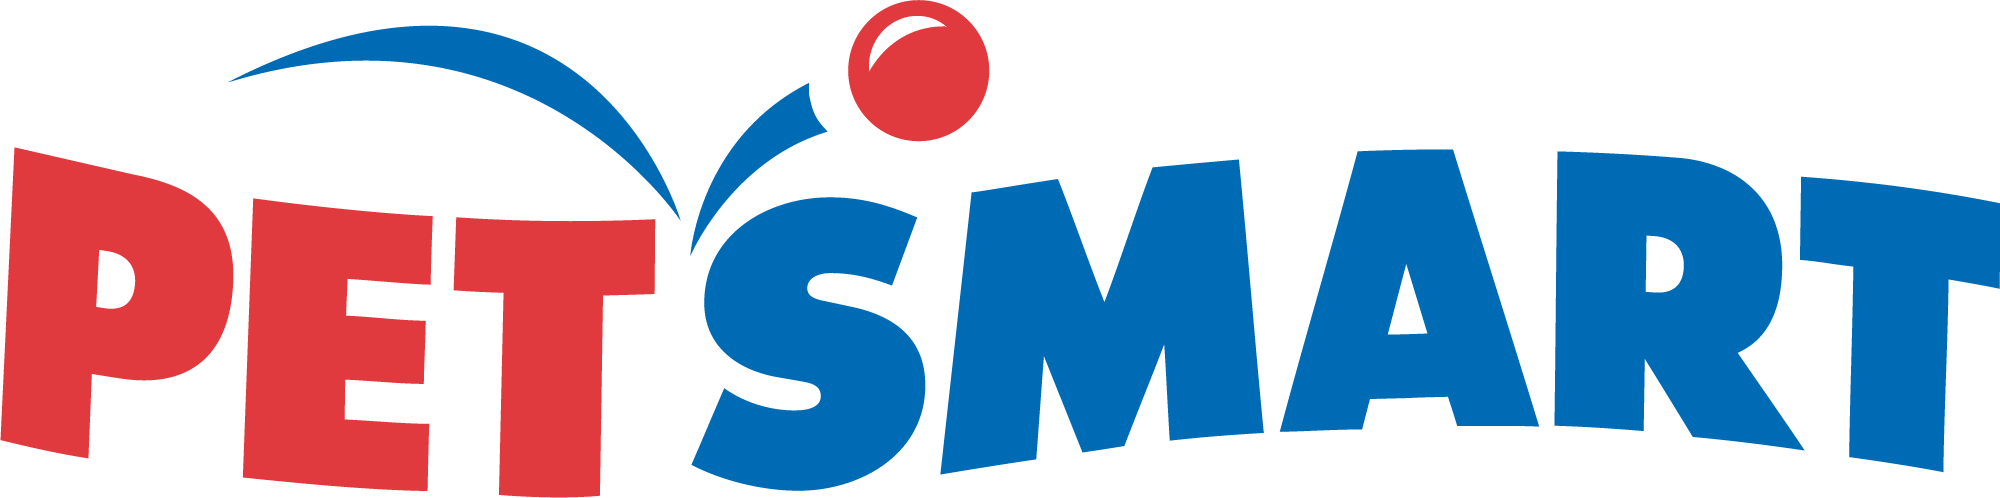 petsmart logo png